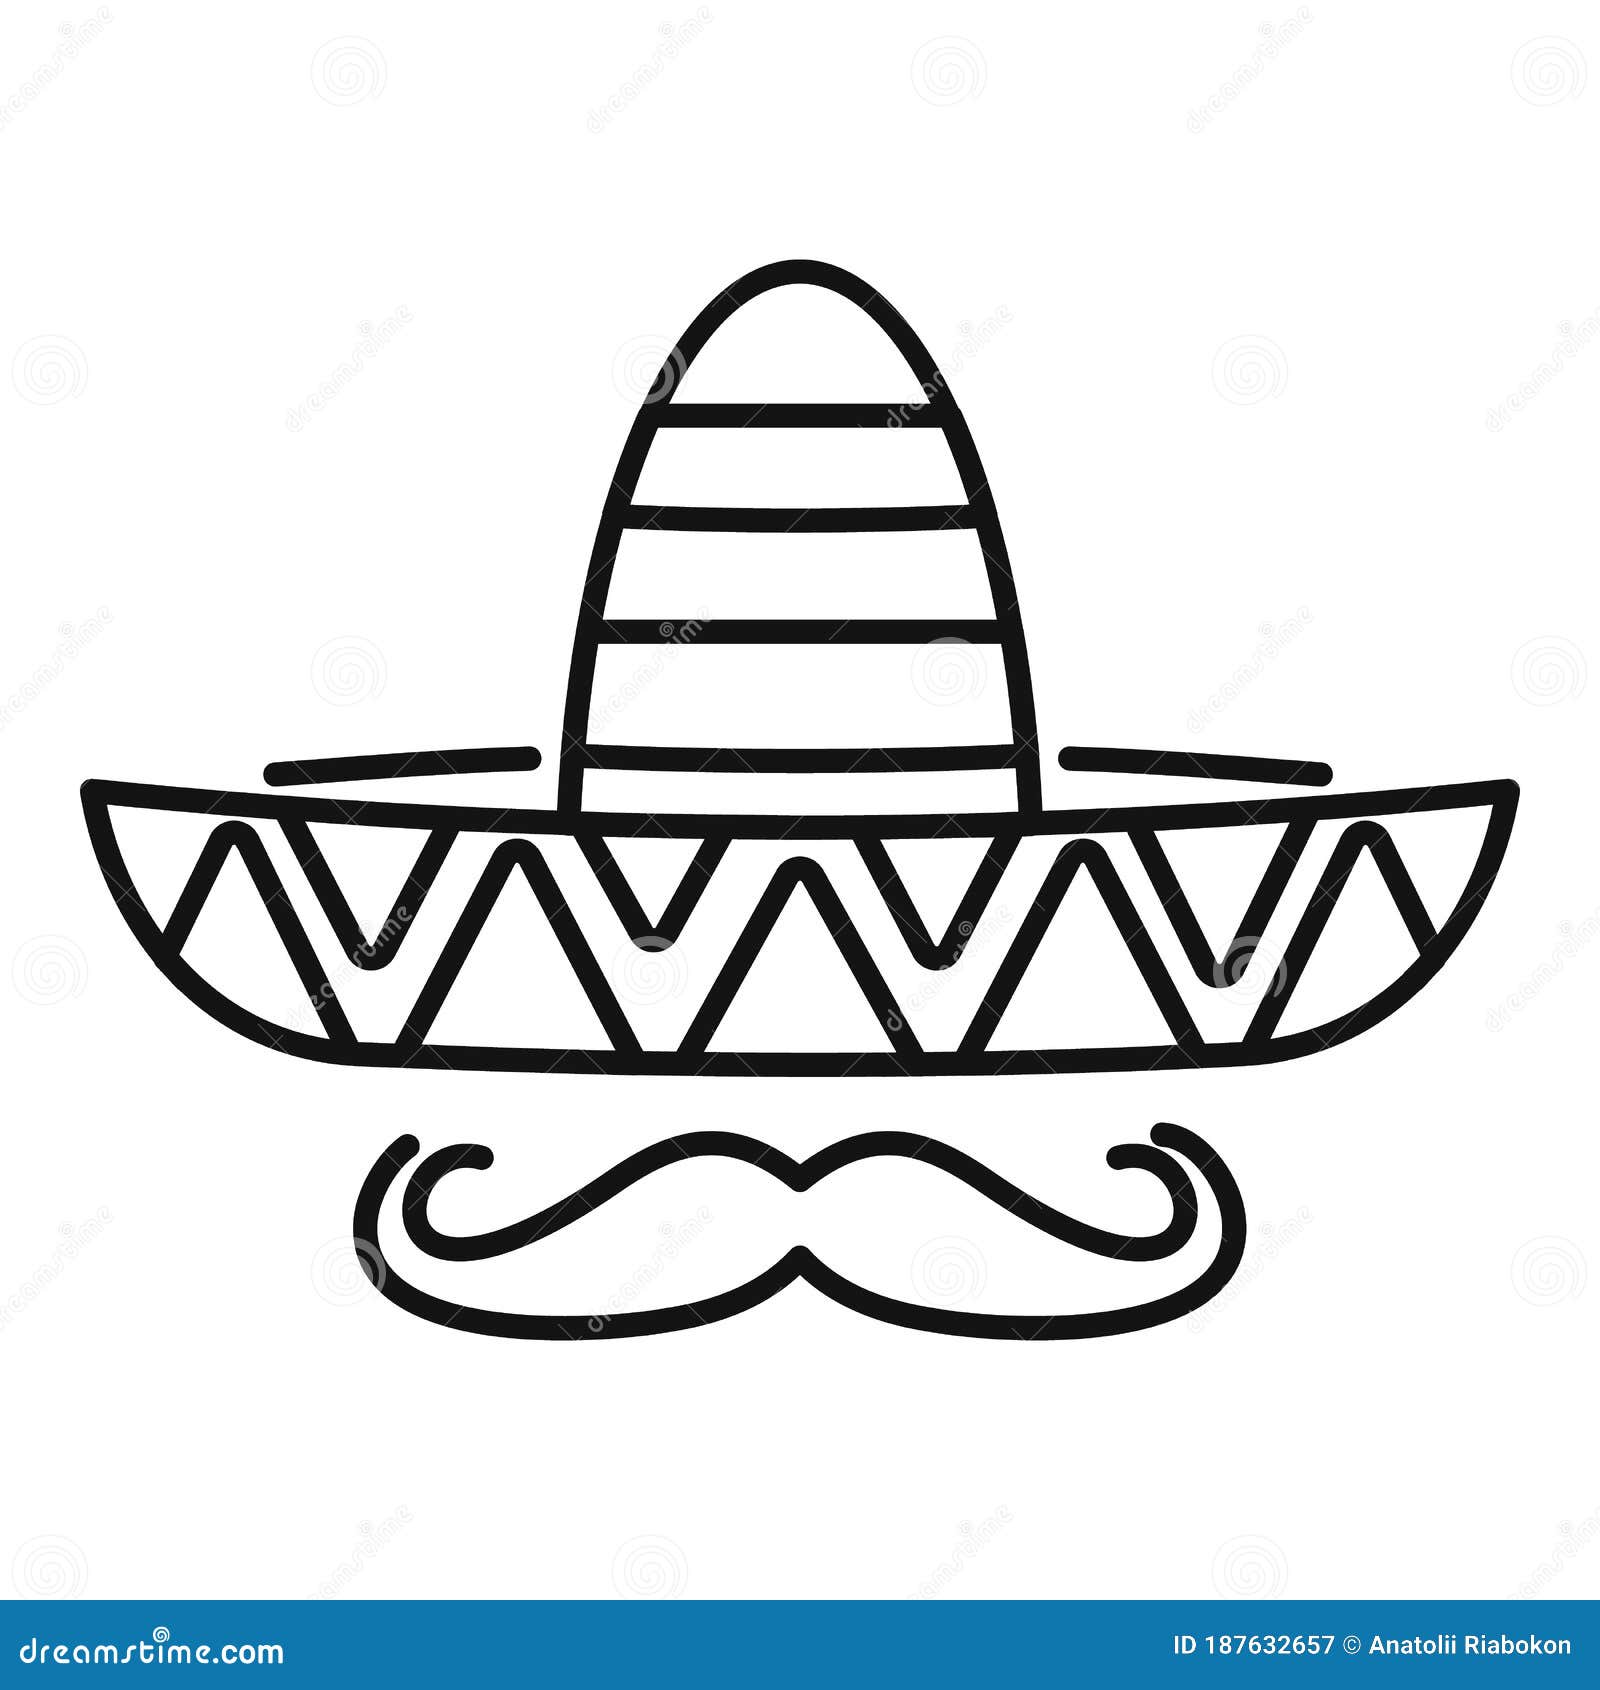 mexican sombrero mustache icon, outline style